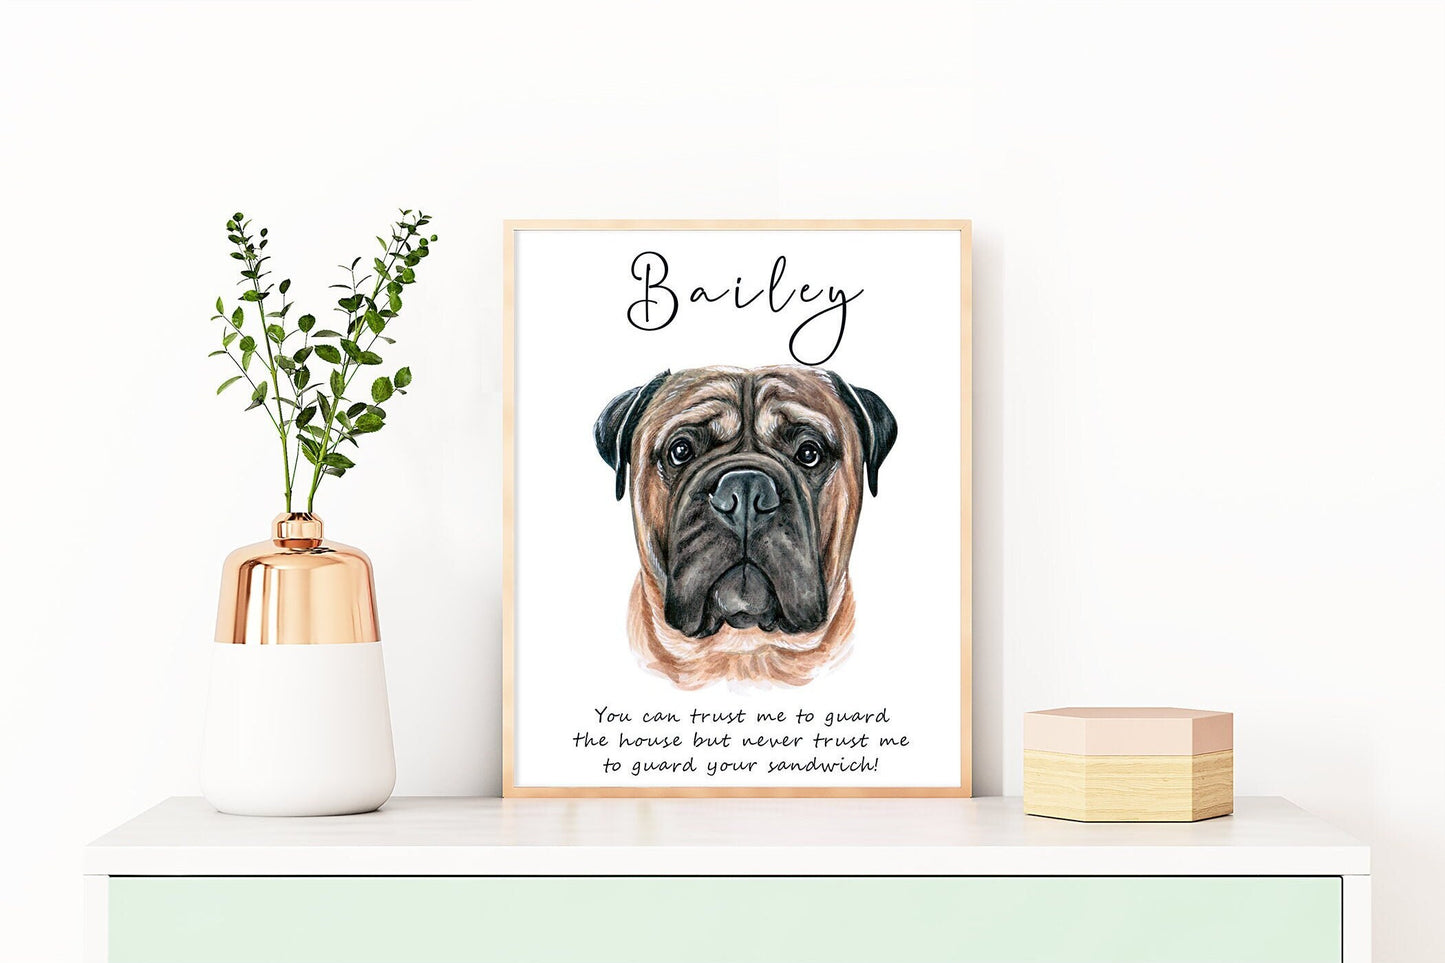 Mastiff dog artwork - featuring portraits of bullmastiff, Dogue de Bordeaux, Cane corso with custom funny message | A4 | A5 | Greeting card